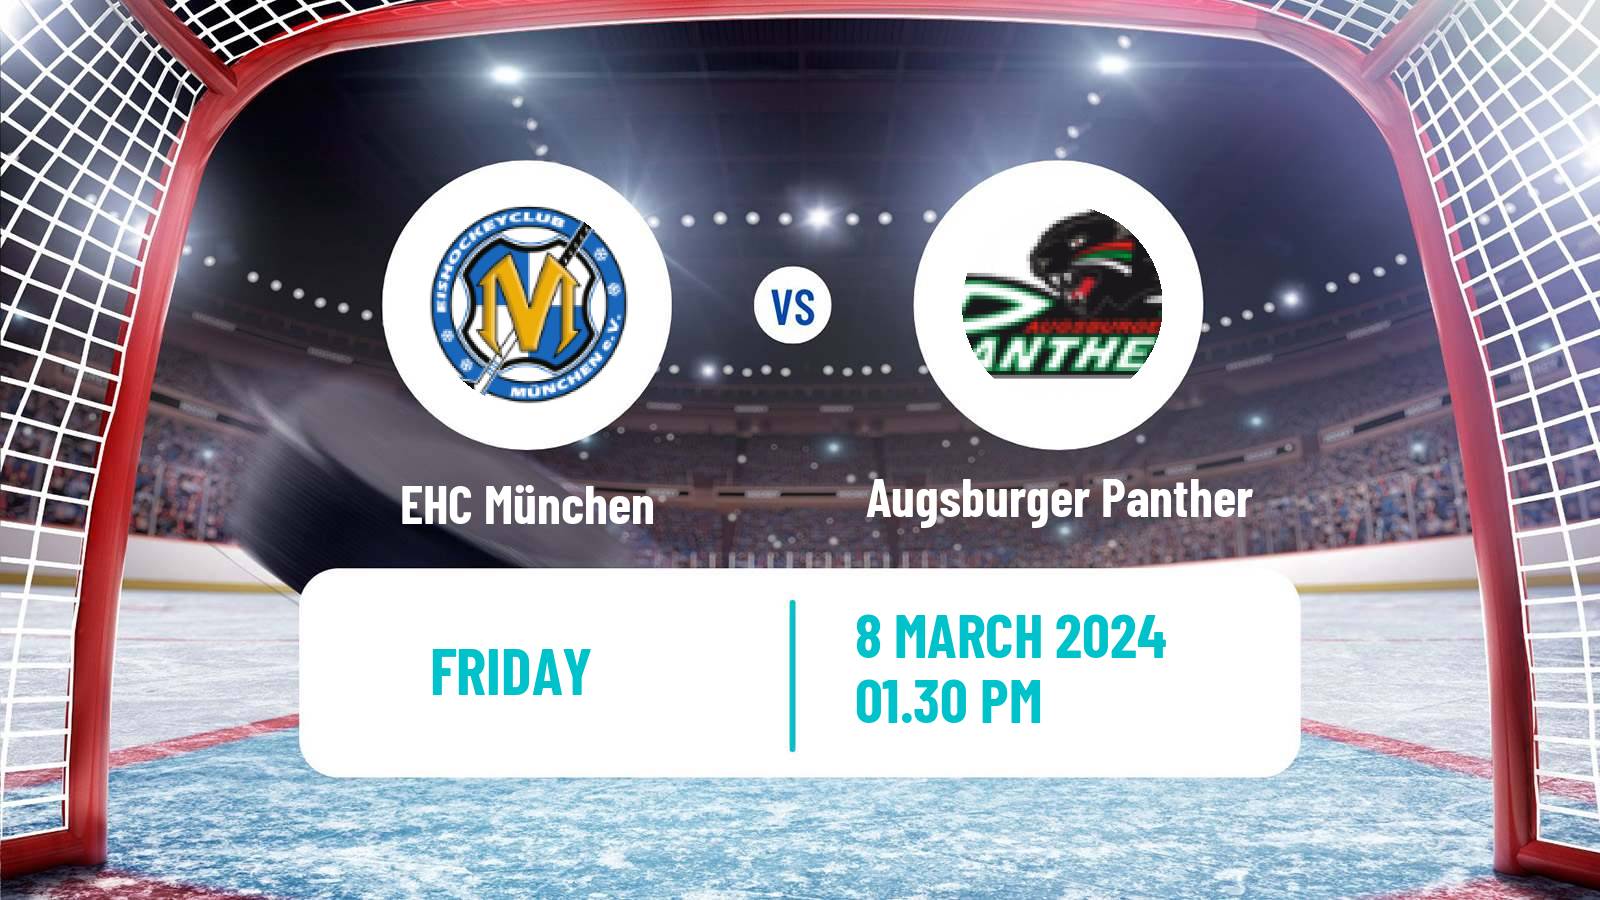 Hockey German Ice Hockey League EHC München - Augsburger Panther